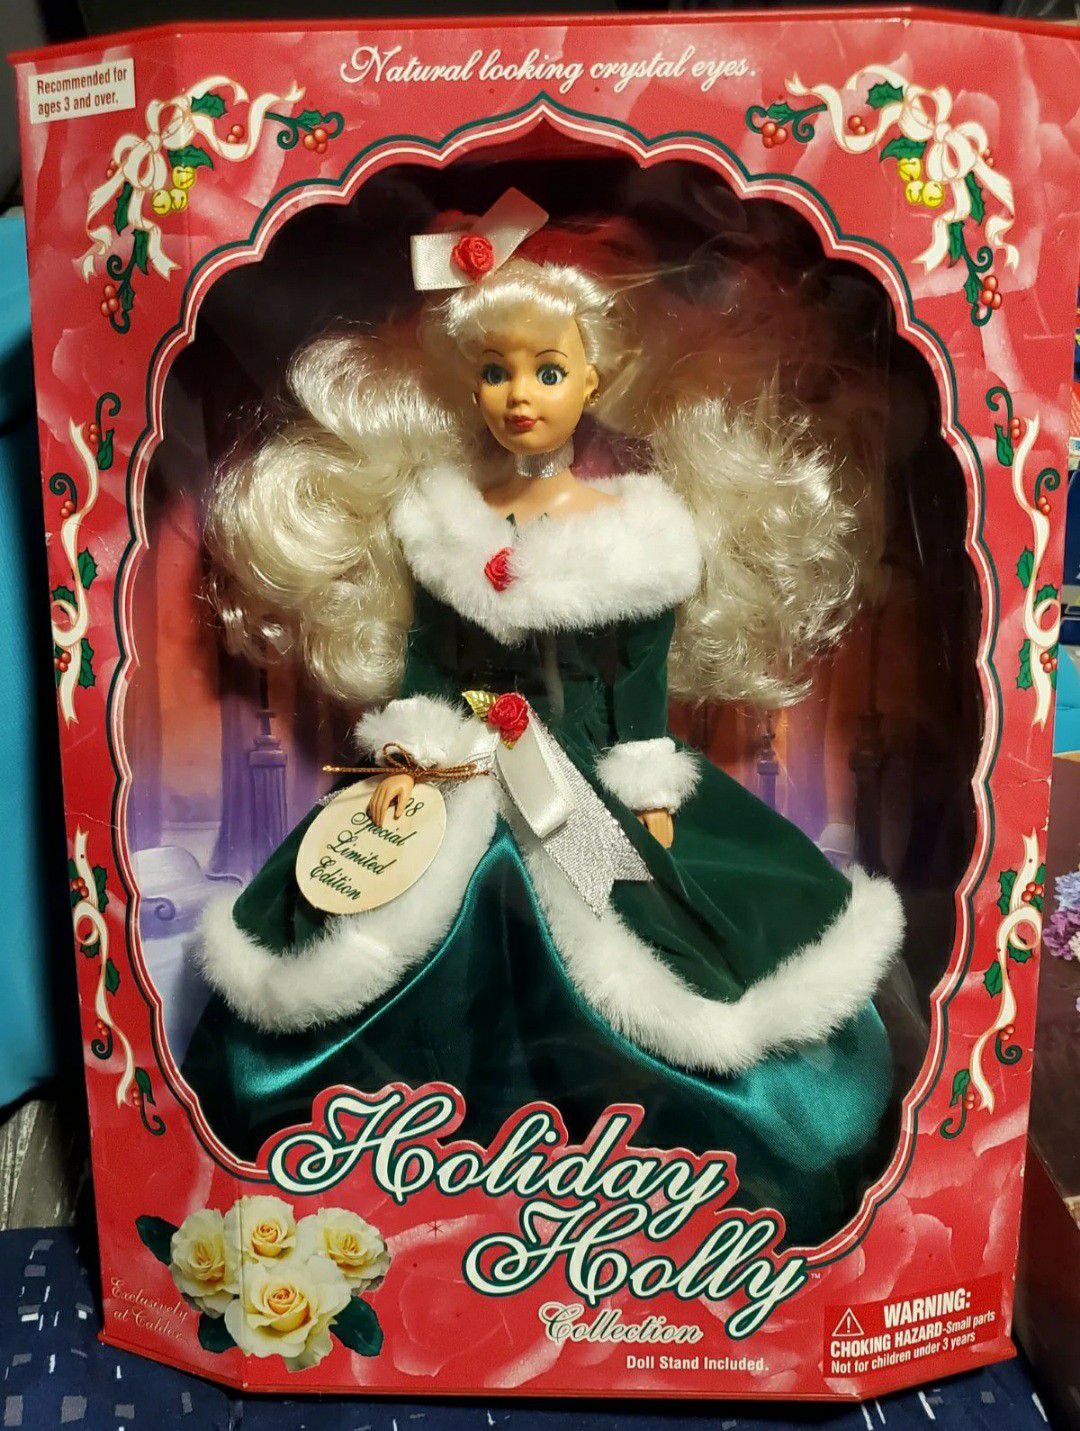 Holiday Barbie